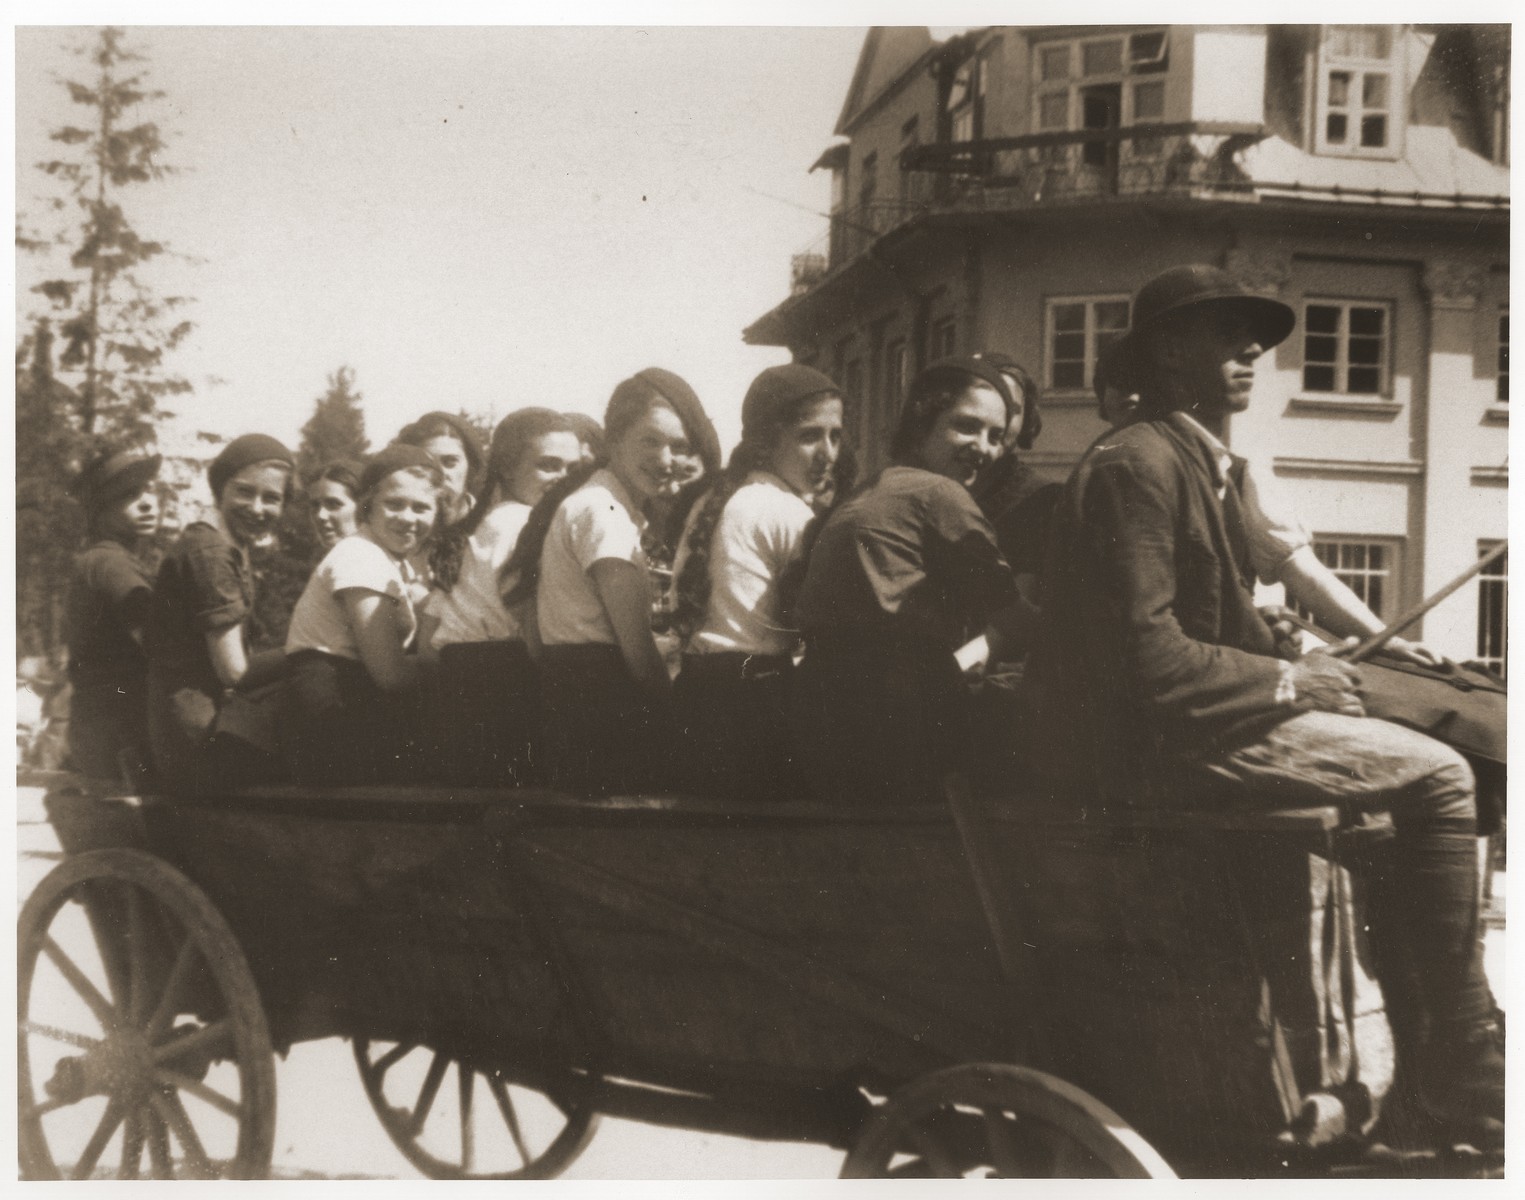 Girls from the Chawatselet Jewish gymnasium in Warsaw ride in a horse-drawn wagon during an outing in Zakopane.  

Pictured from left to right are: Dola Gurfinkel (teacher) Hadassah Goldberg; Hadassah Nerenlender; Sara Buchlender; Luba Garbowicz; Recha Diament; Cypora Rzetelna (teacher); Mina Frydland; and Hela Szapiro.